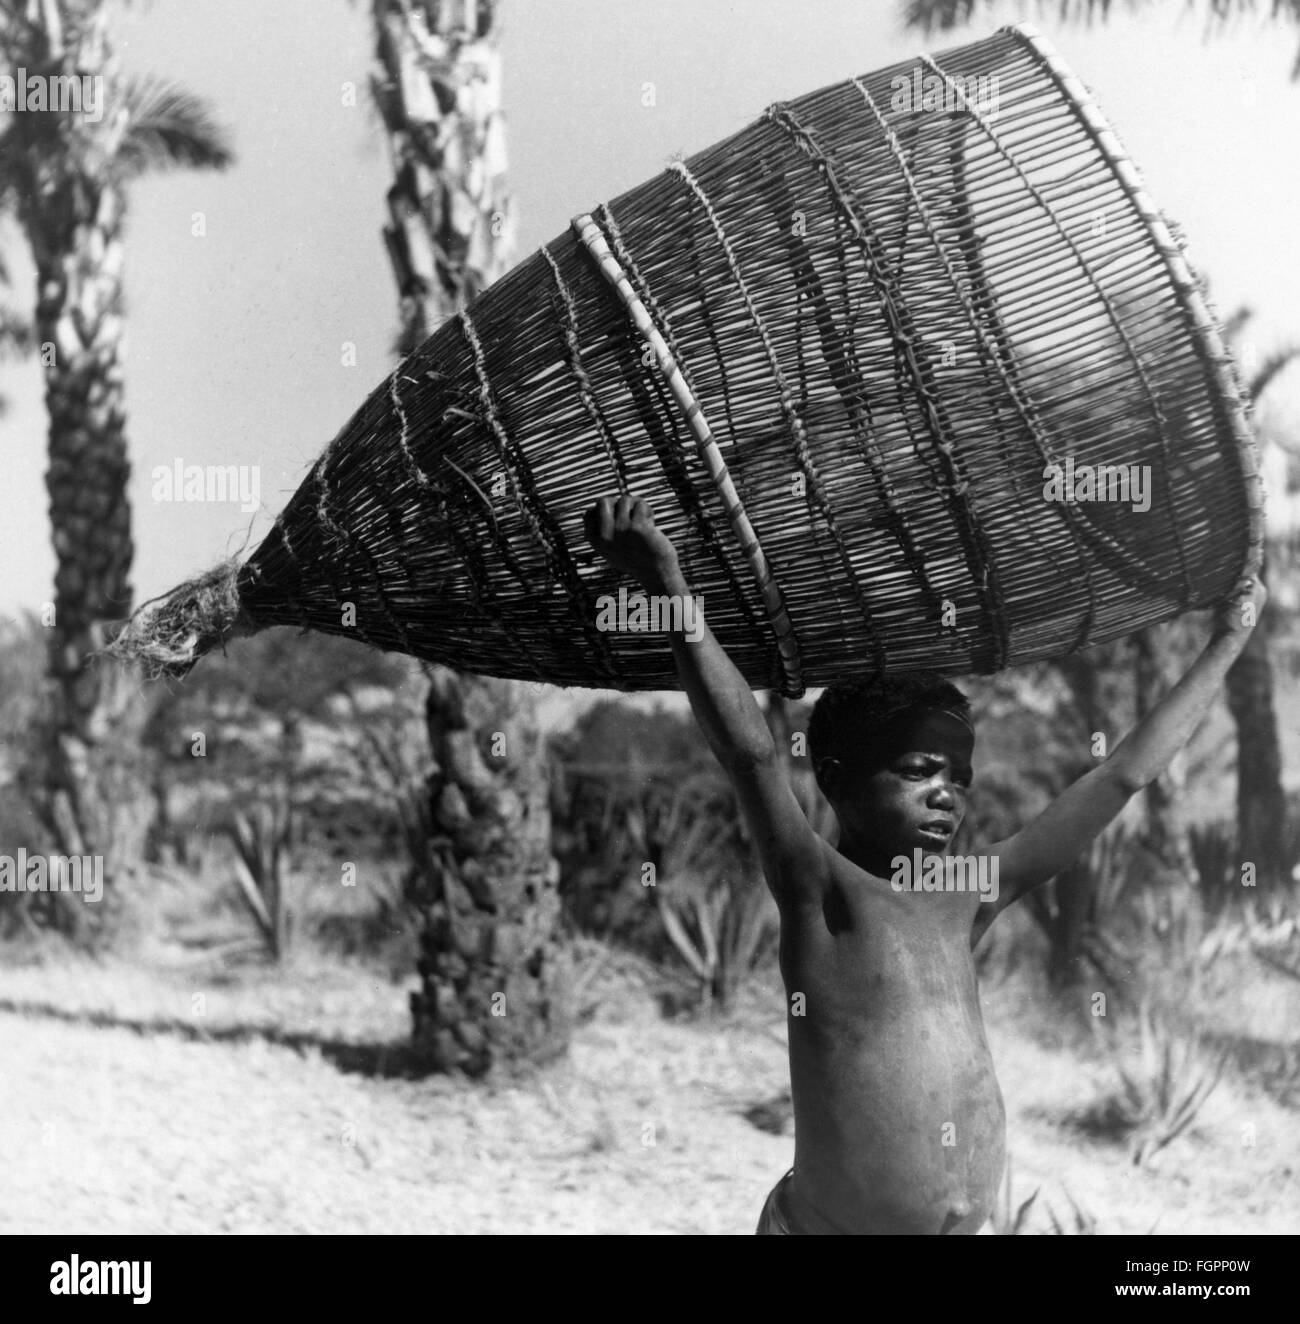 Fishing basket Black and White Stock Photos & Images - Alamy